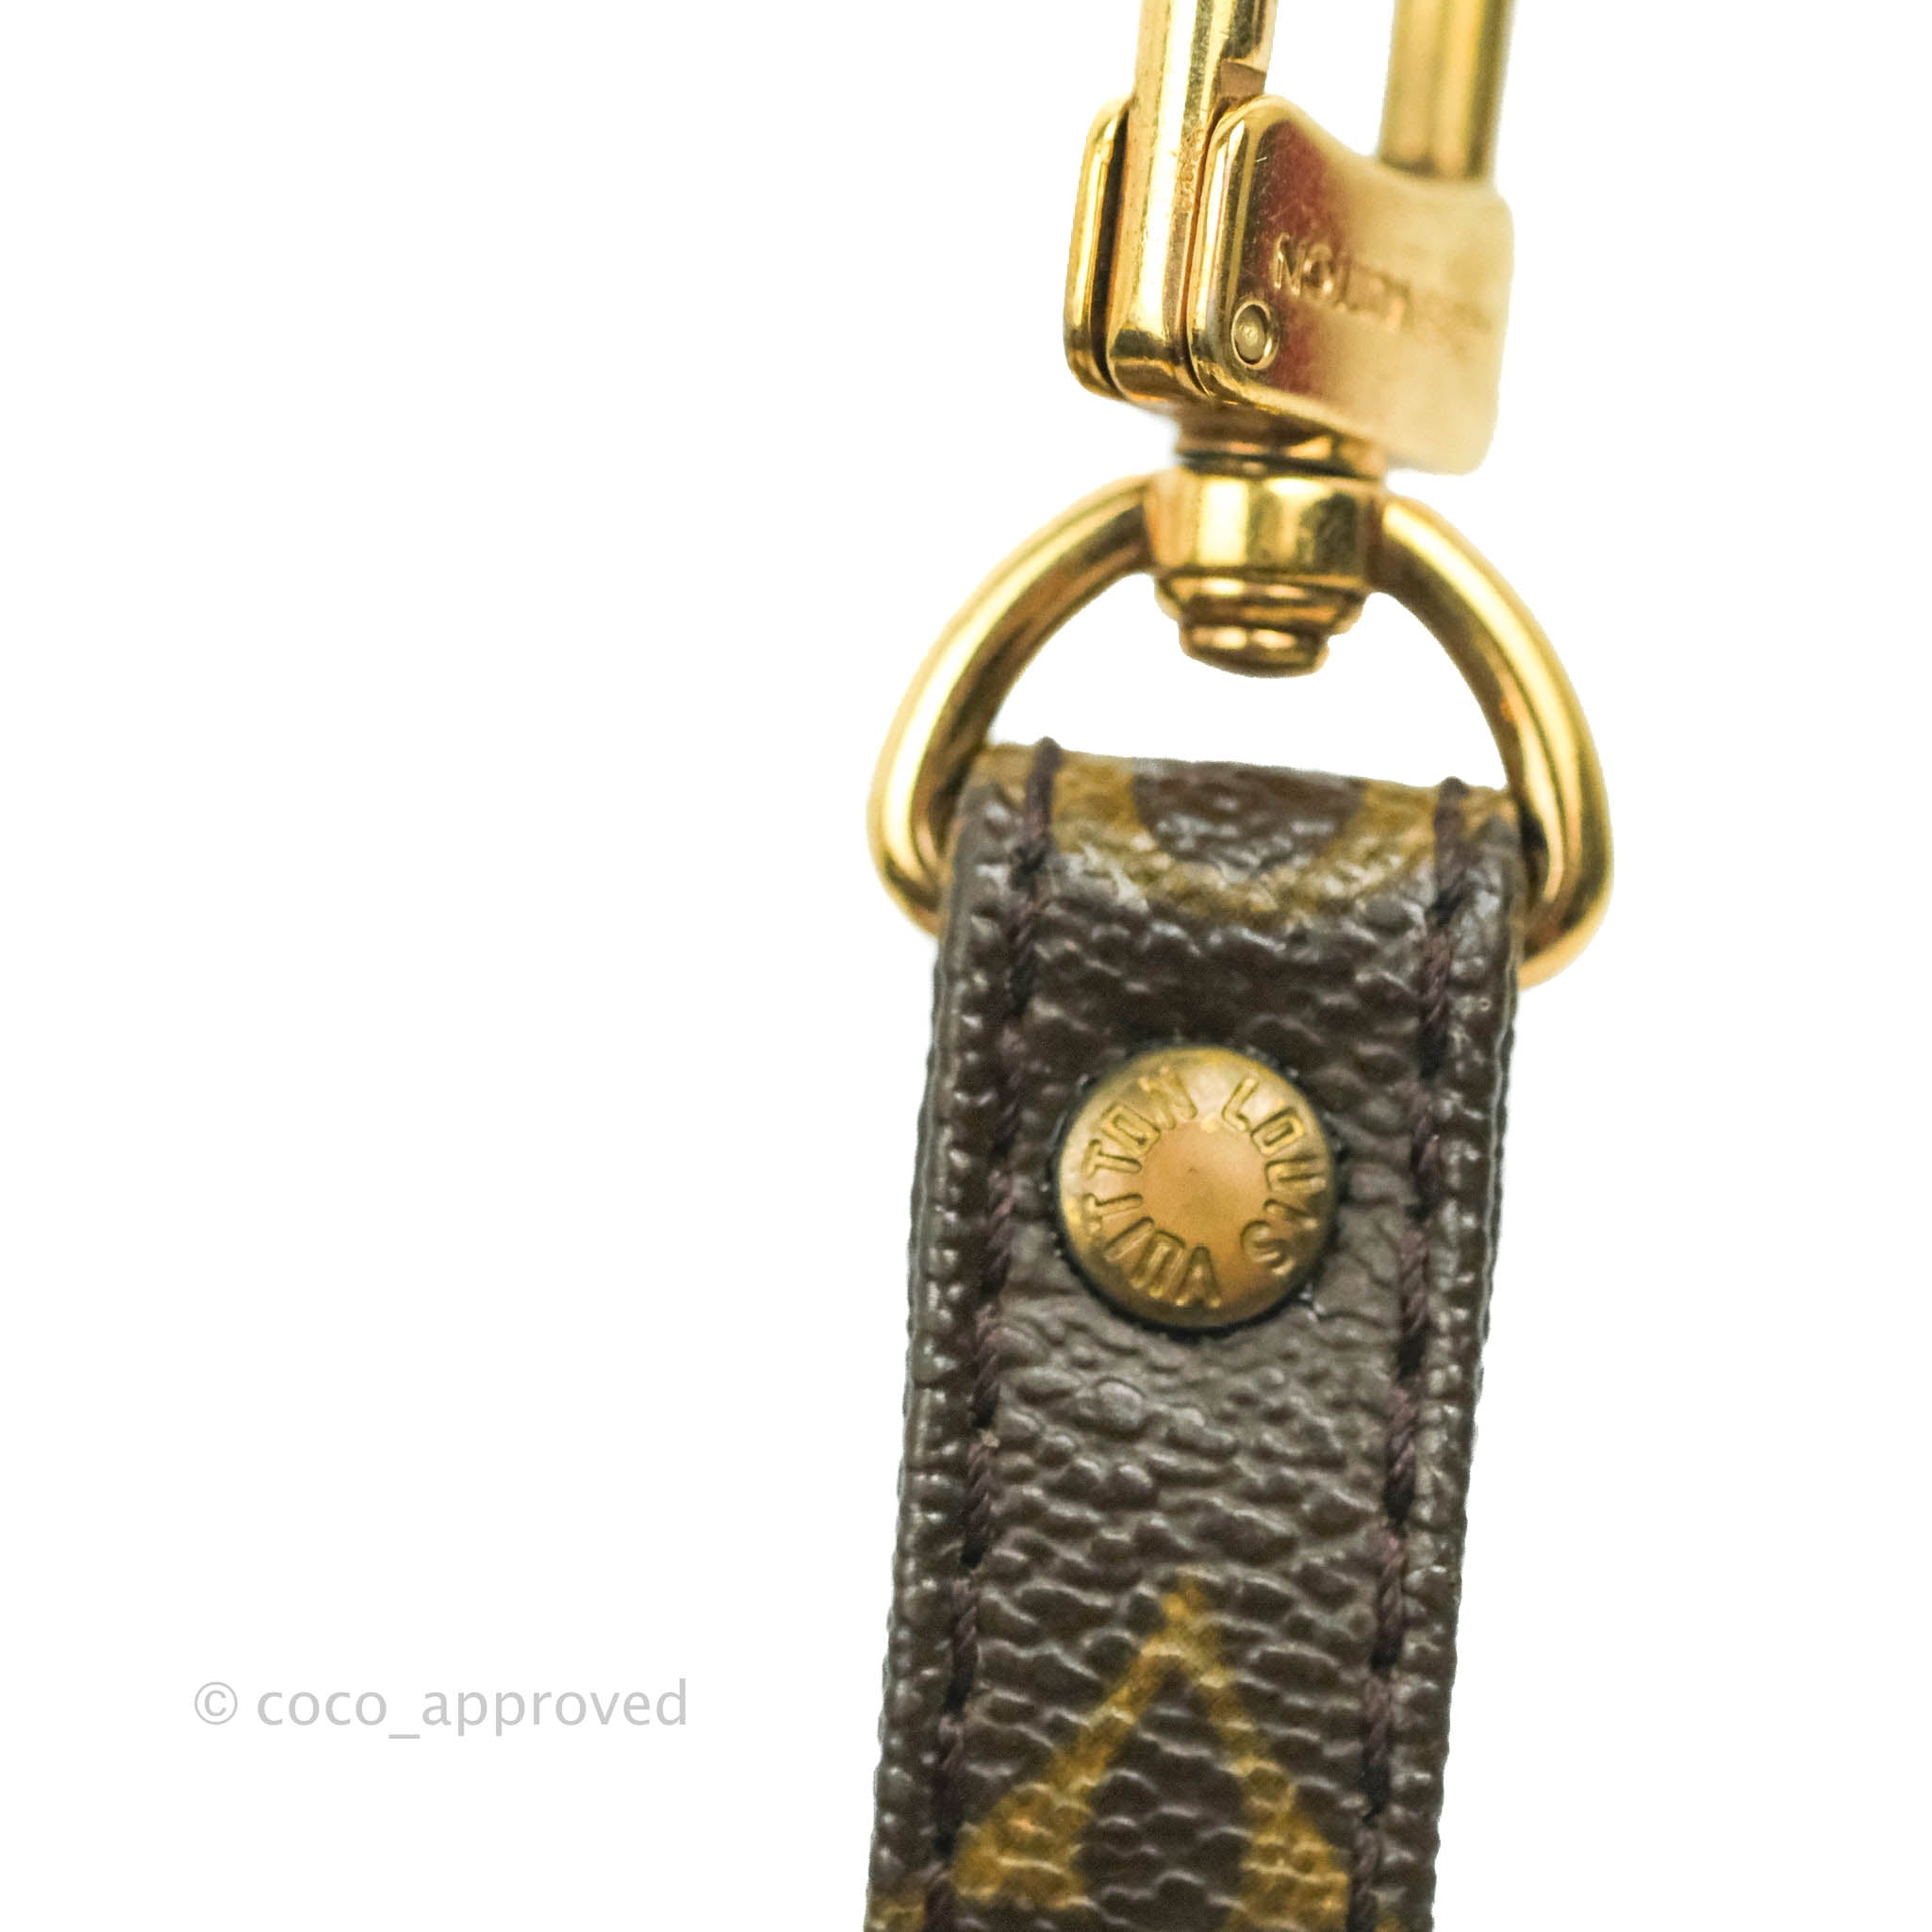 Louis Vuitton VERY CUTE Authentic Nano Mini Speedy Monogram W/ Strap -  $1191 - From Uta